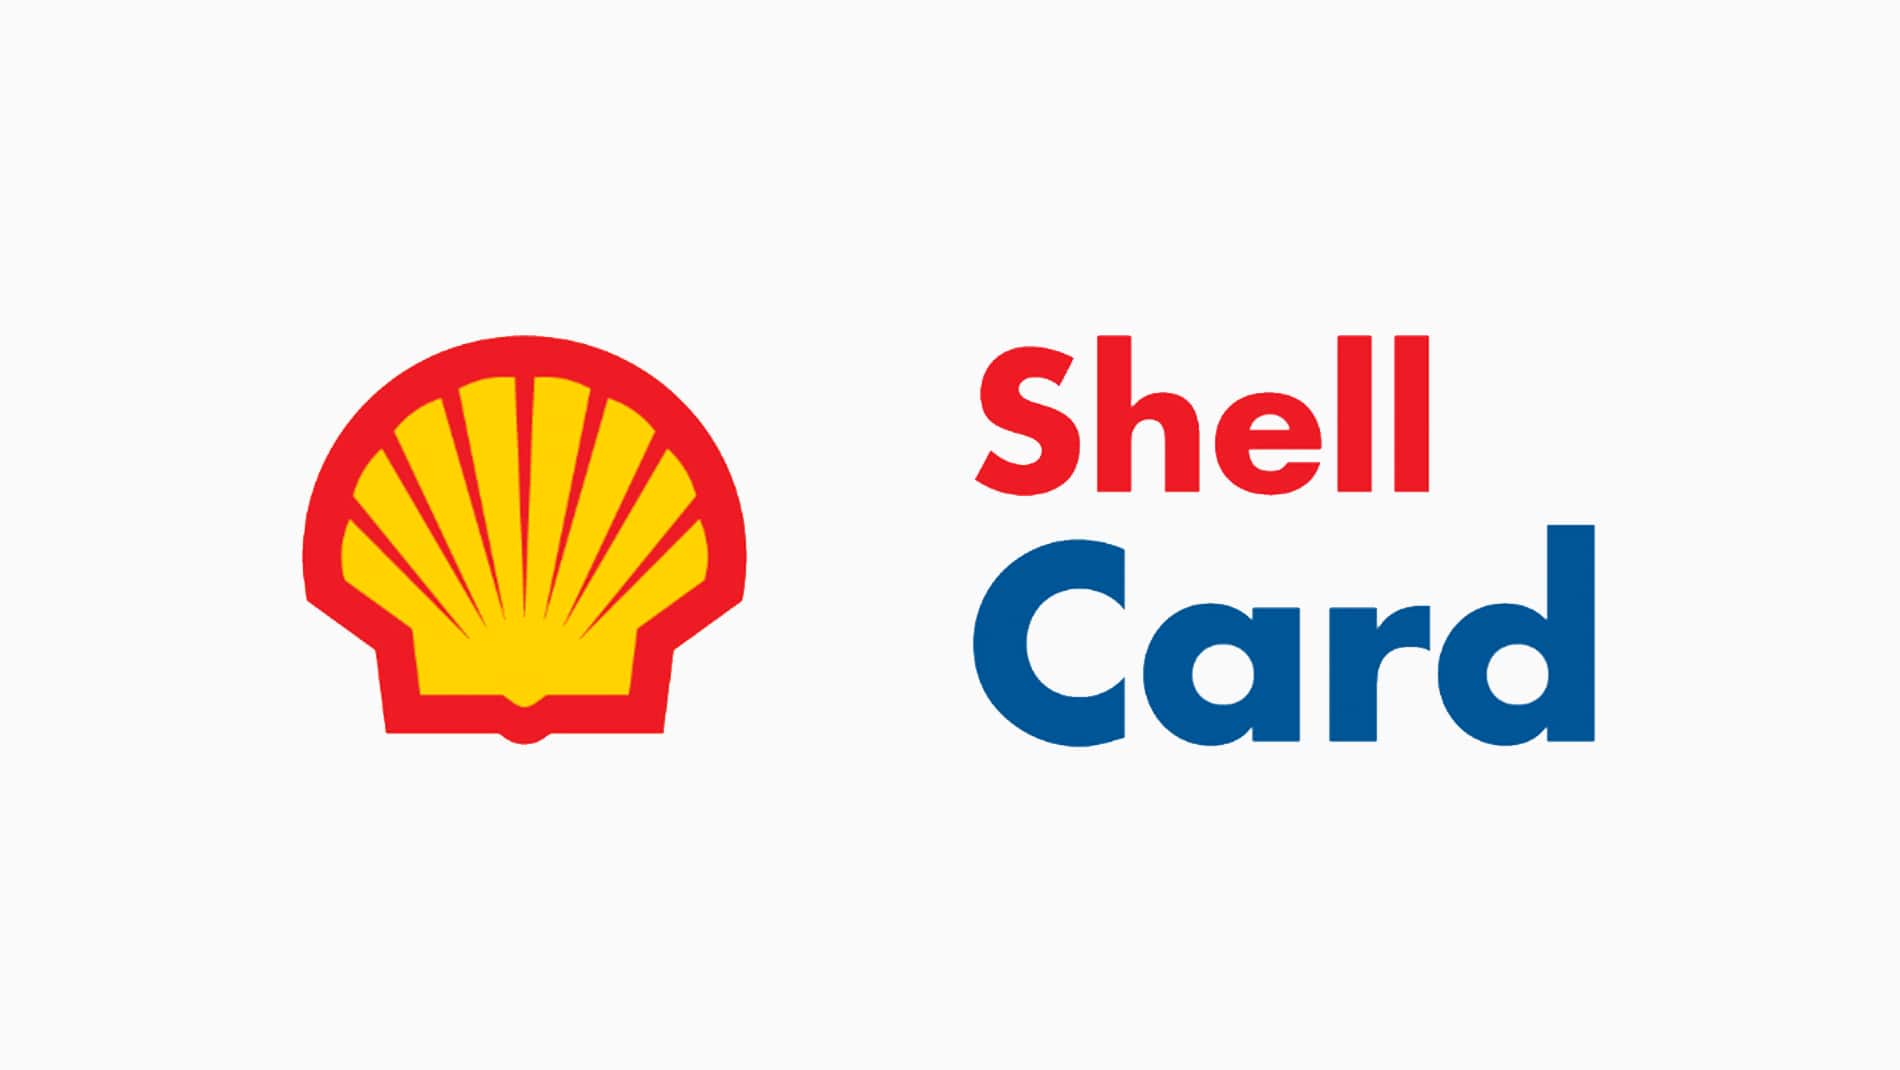 The Shell Card logo